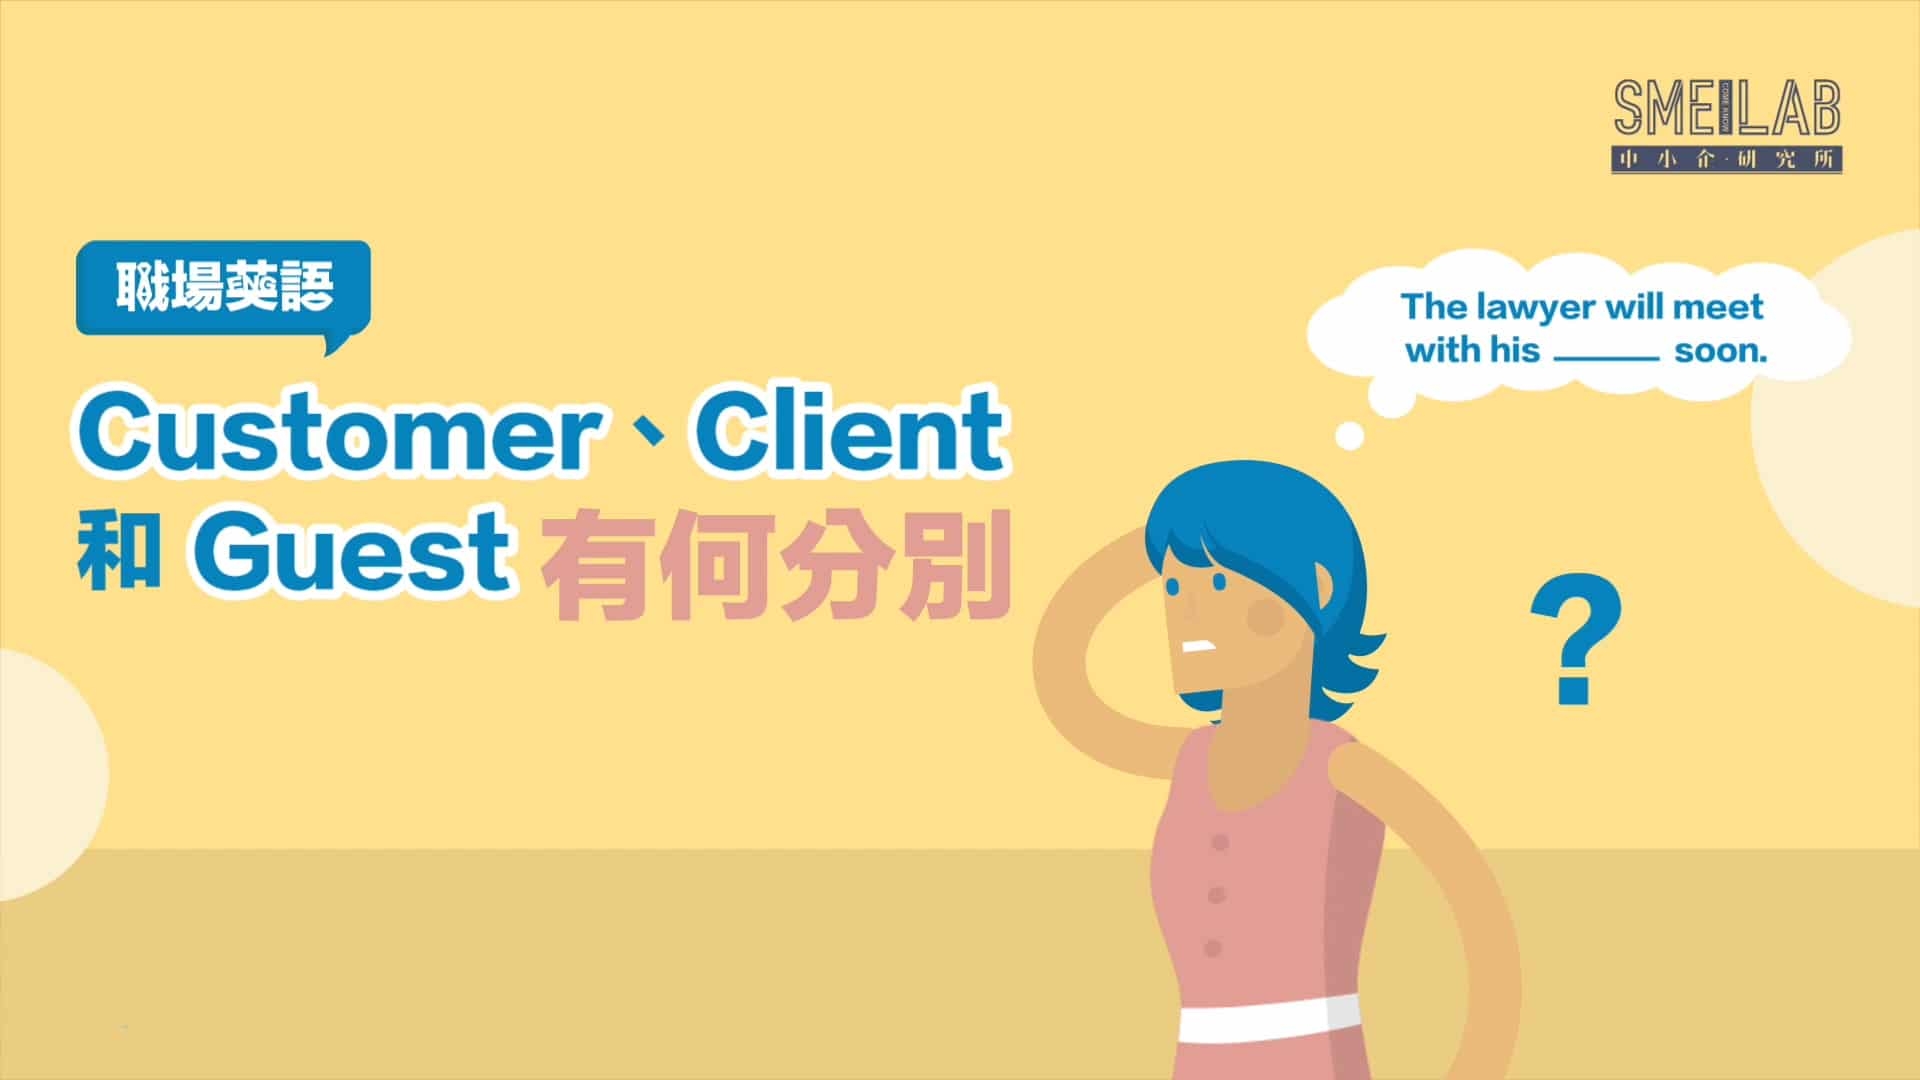 職場英語：”Customer”、”Client” 和 “Guest” 3者有何分別？